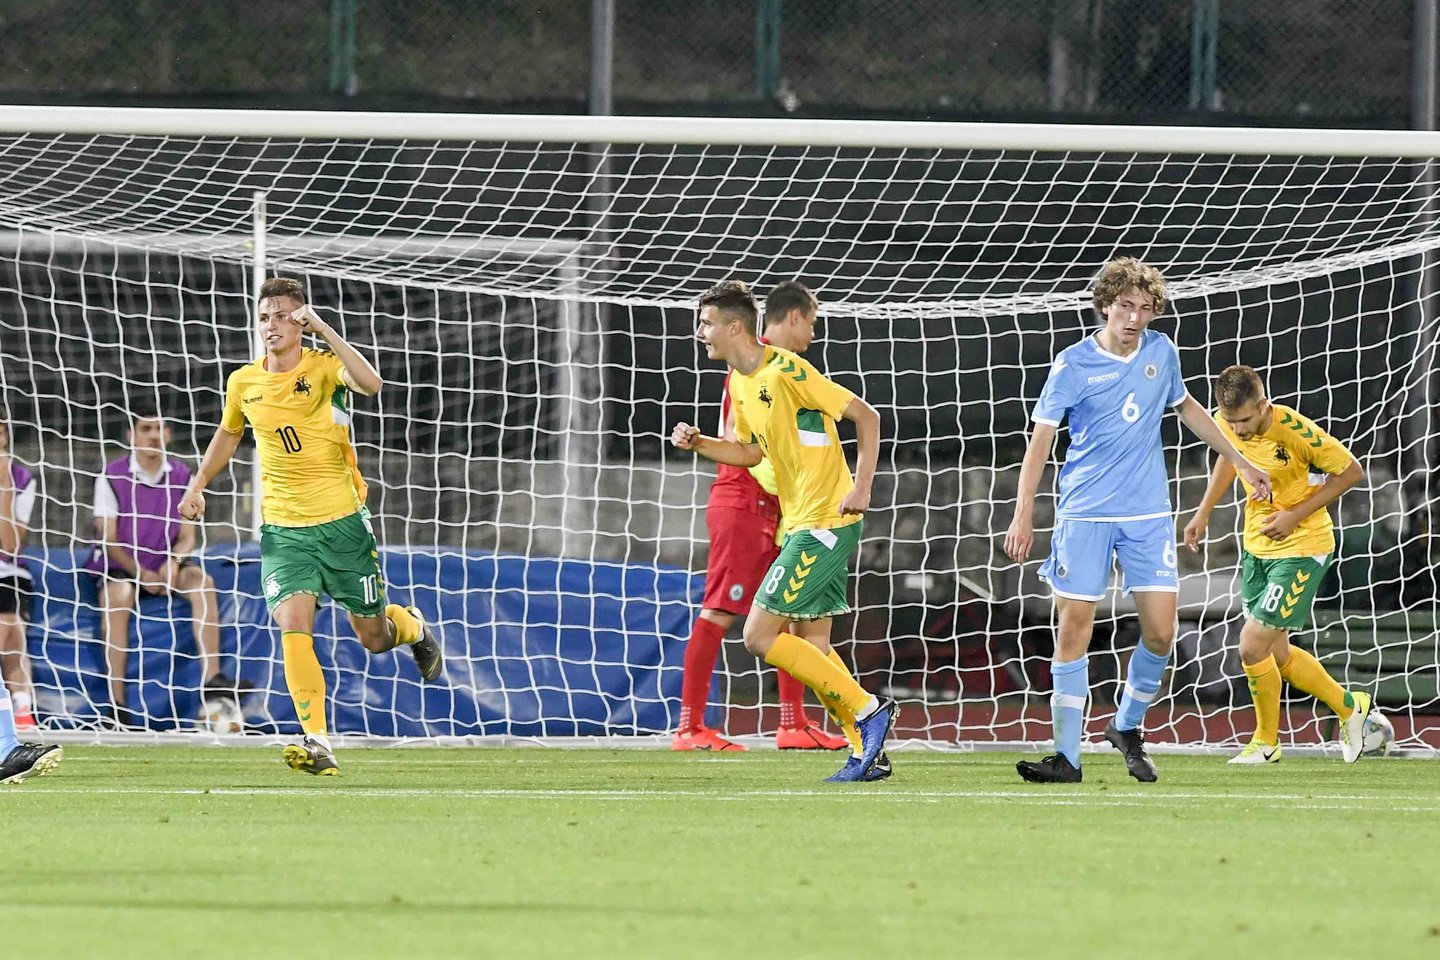  Lietuviai 3:0 sutriuškino San Marino bendraamžius.<br> FSGC/Pruccoli nuotr.